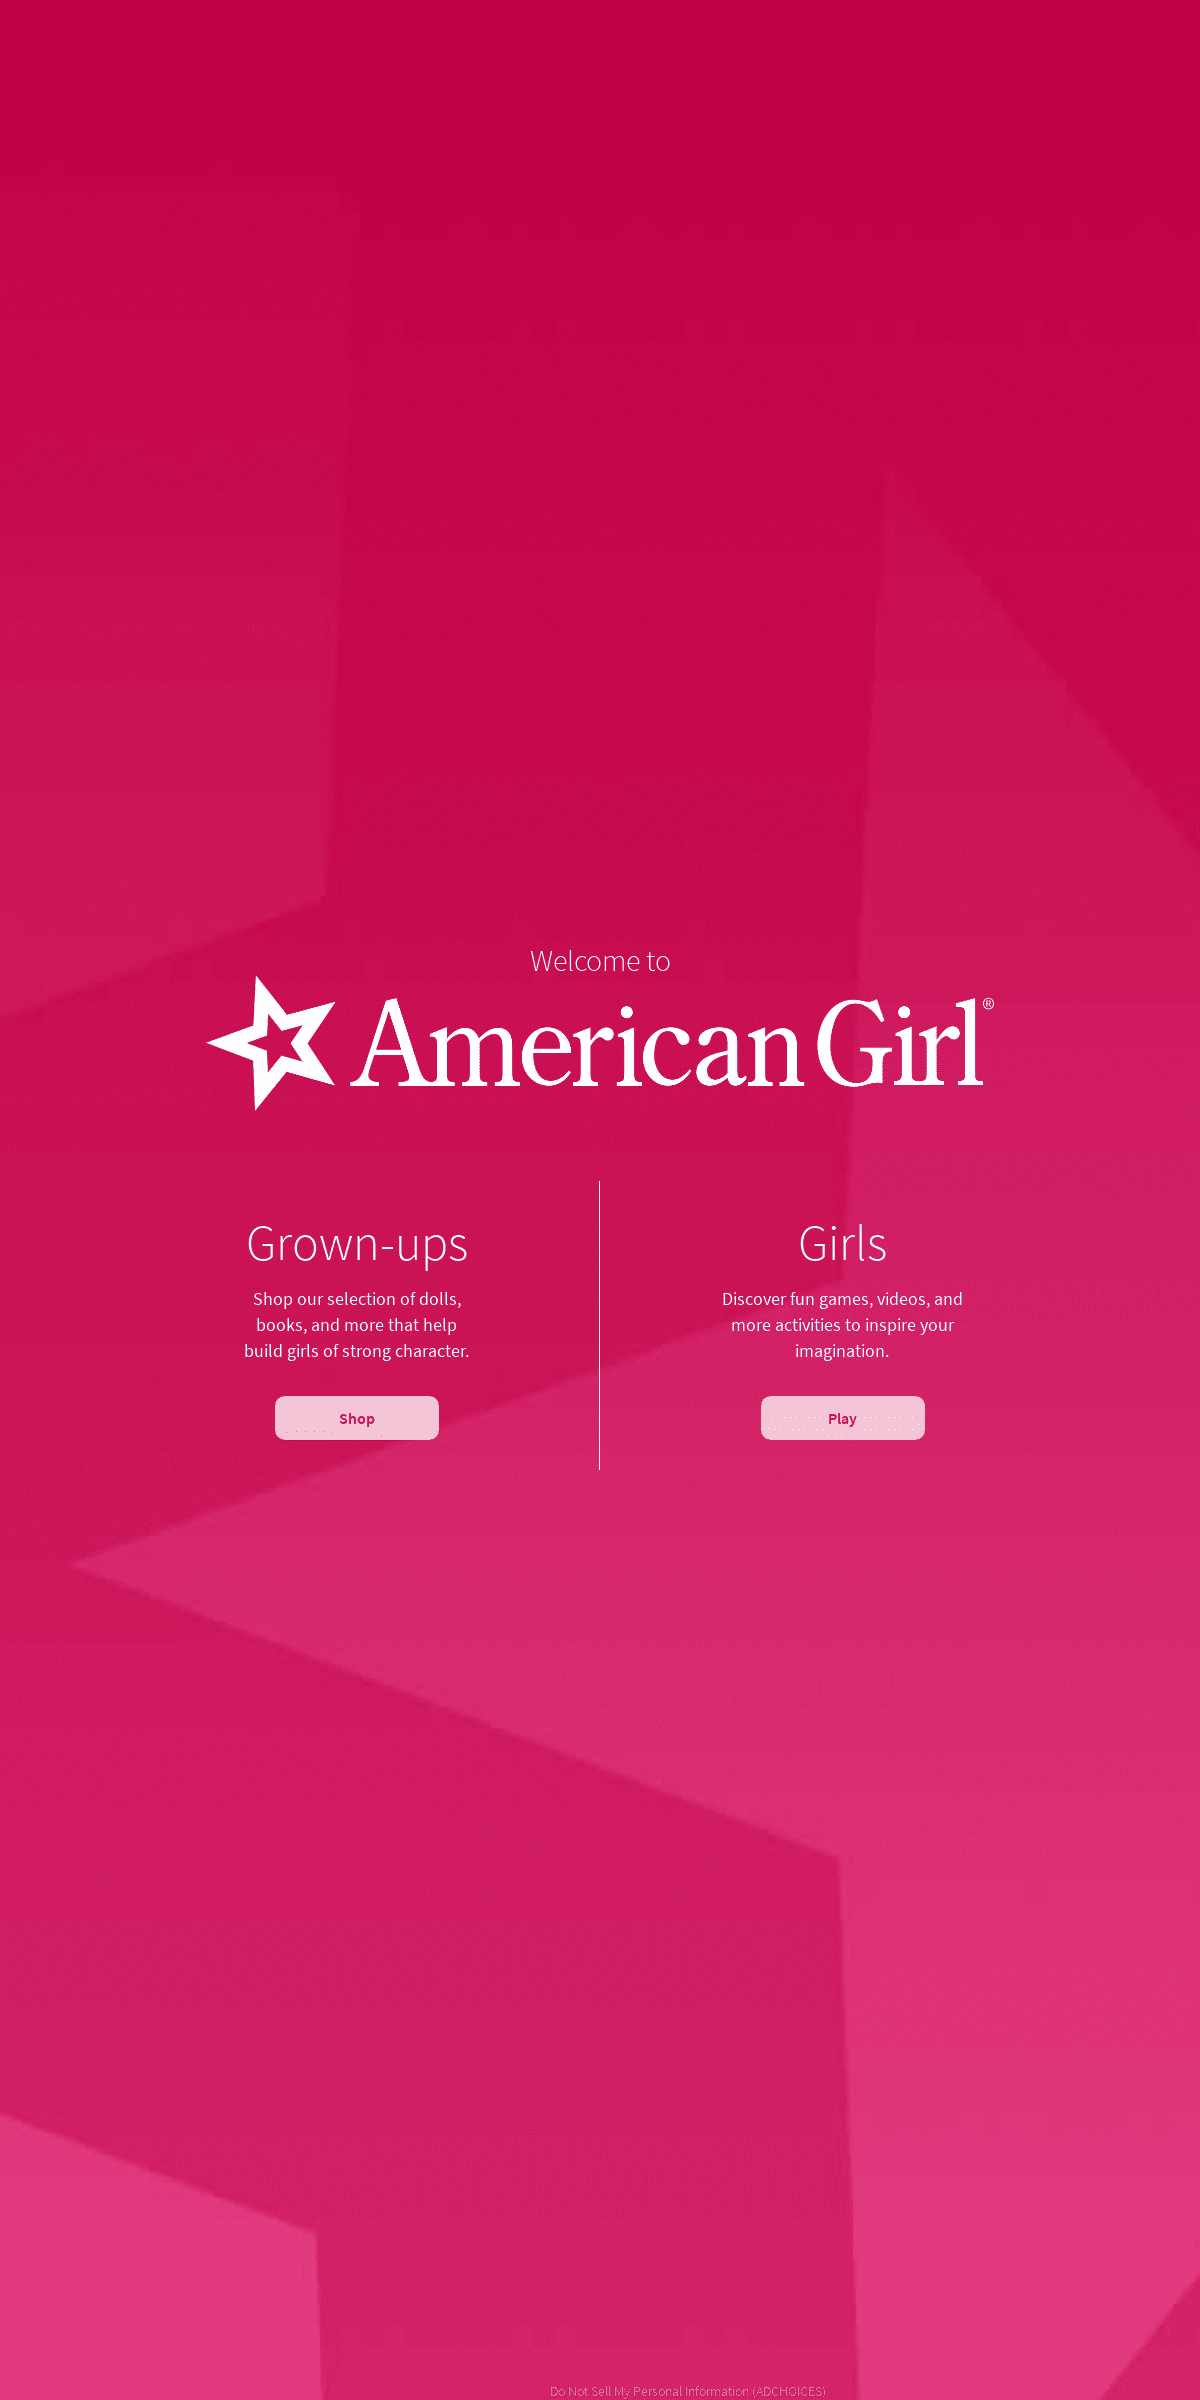 A complete backup of americangirl.com